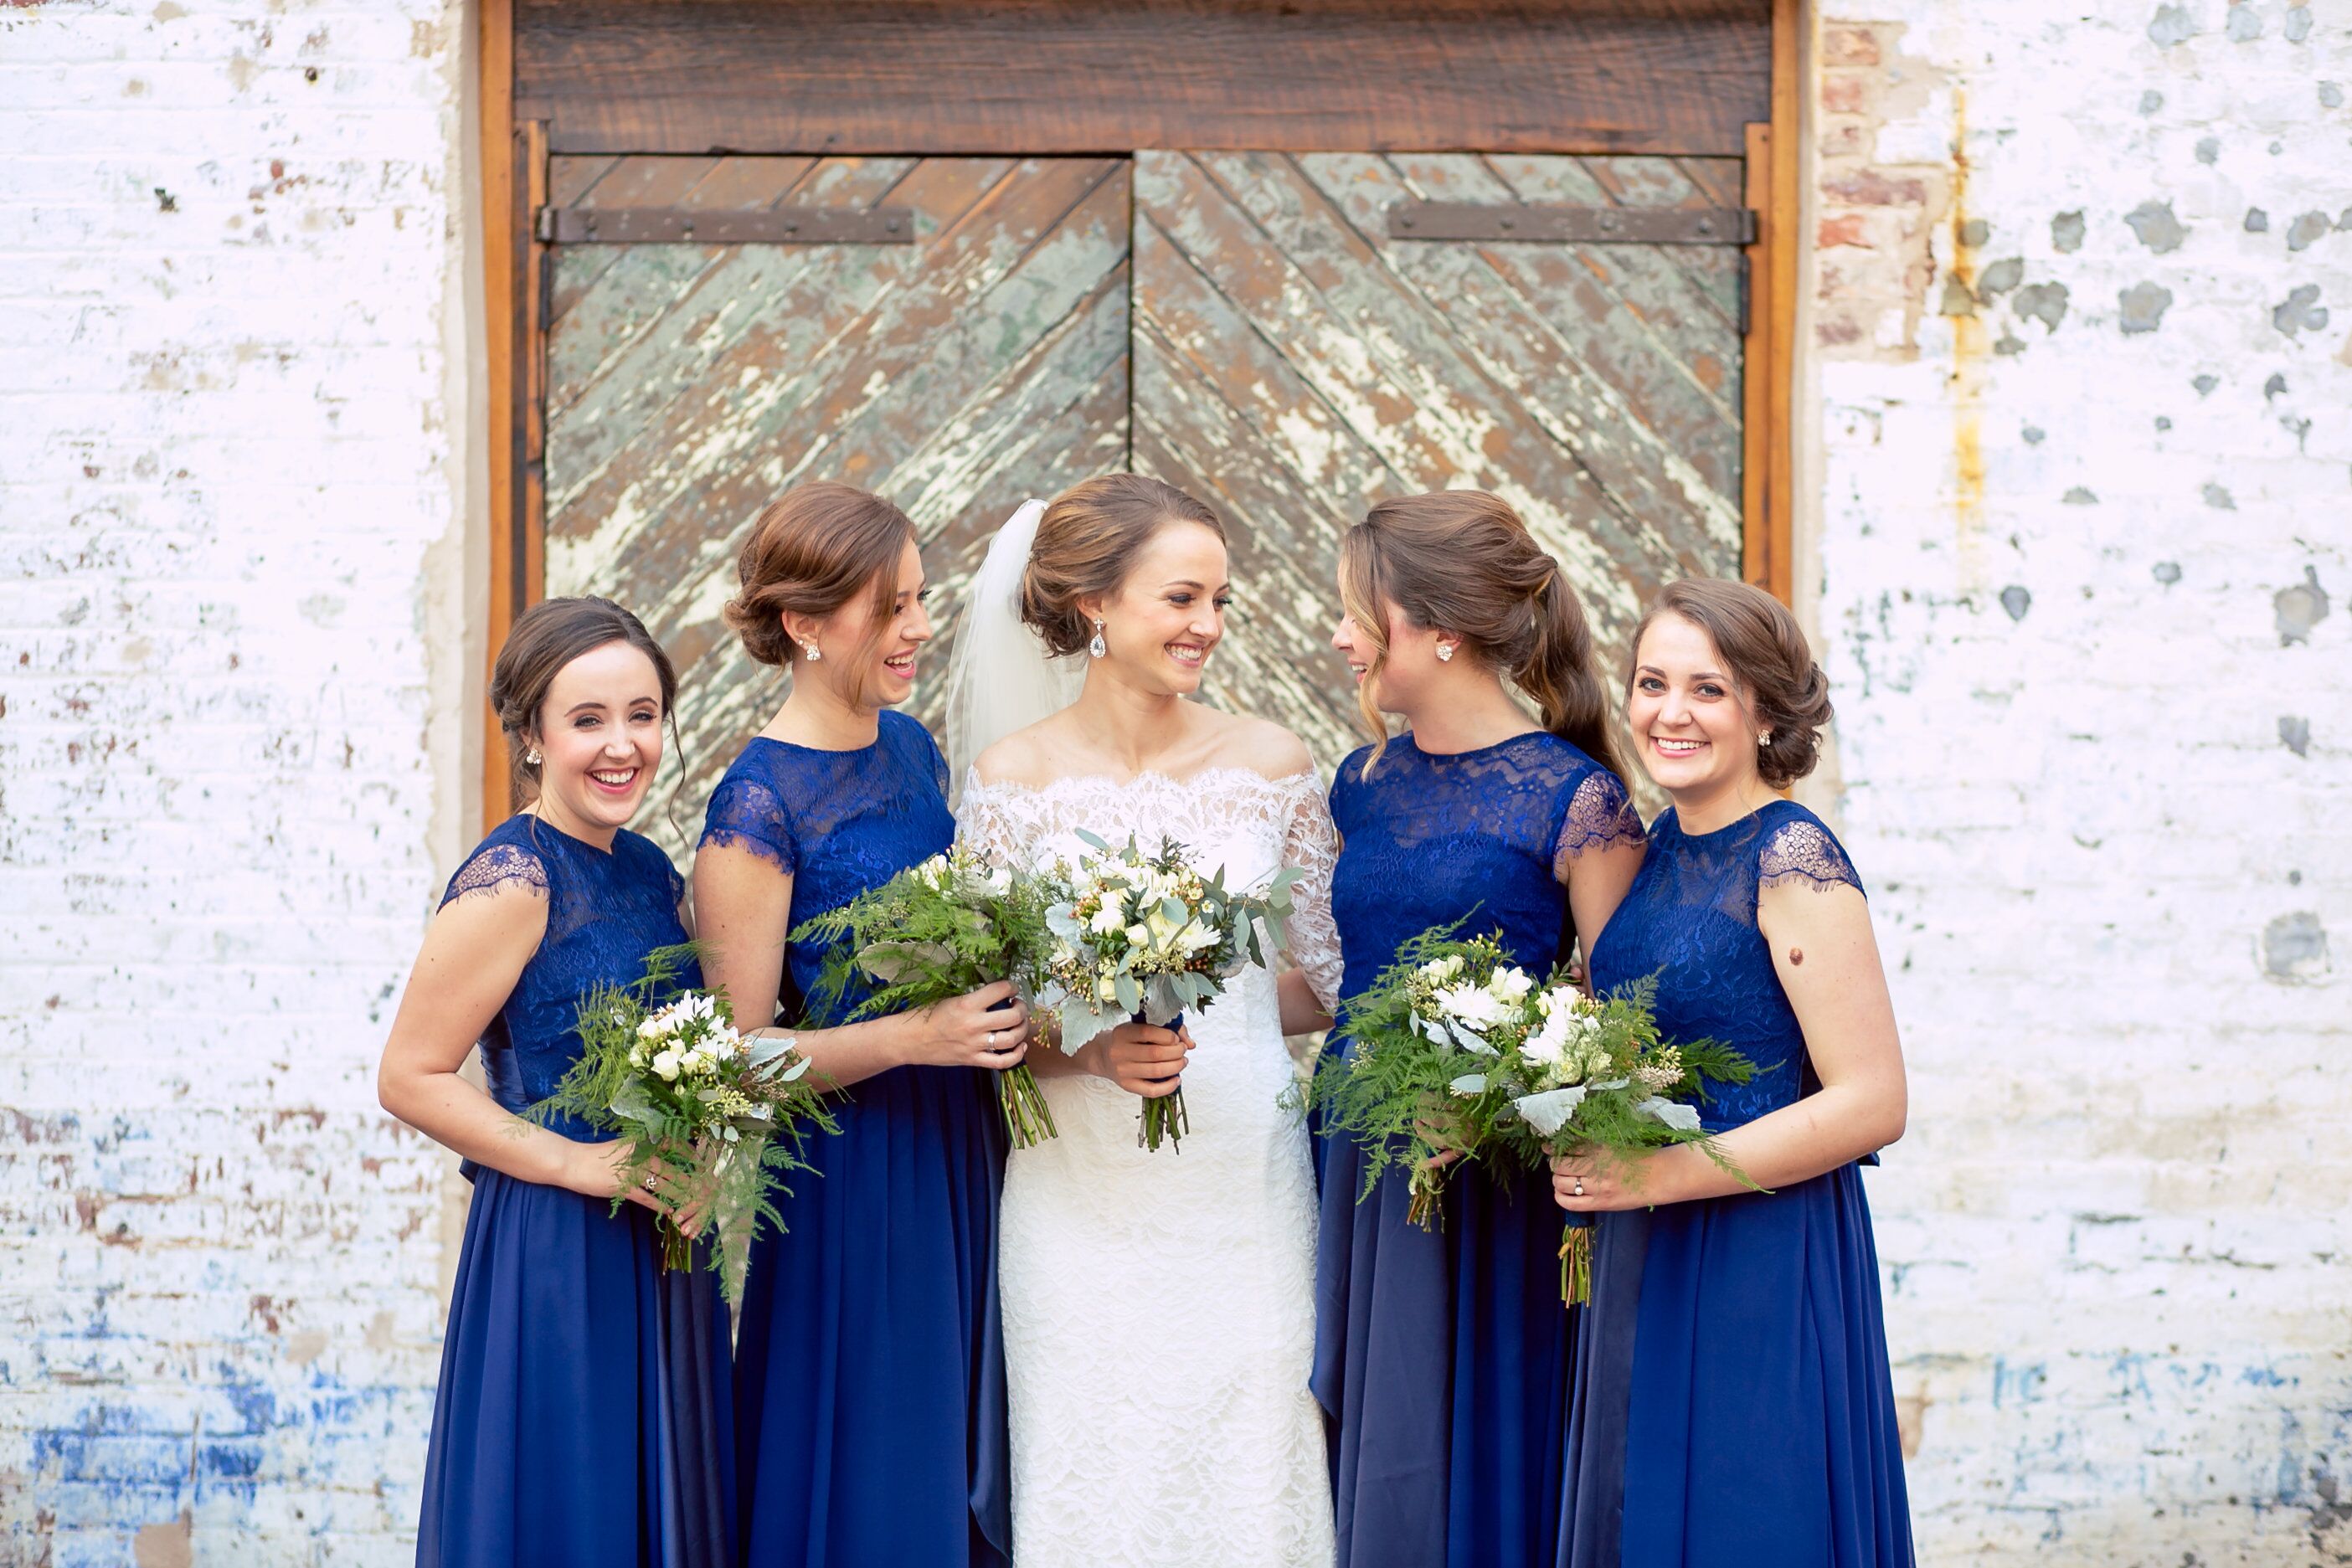 Cobalt Blue Bridesmaid Dresses and Bride